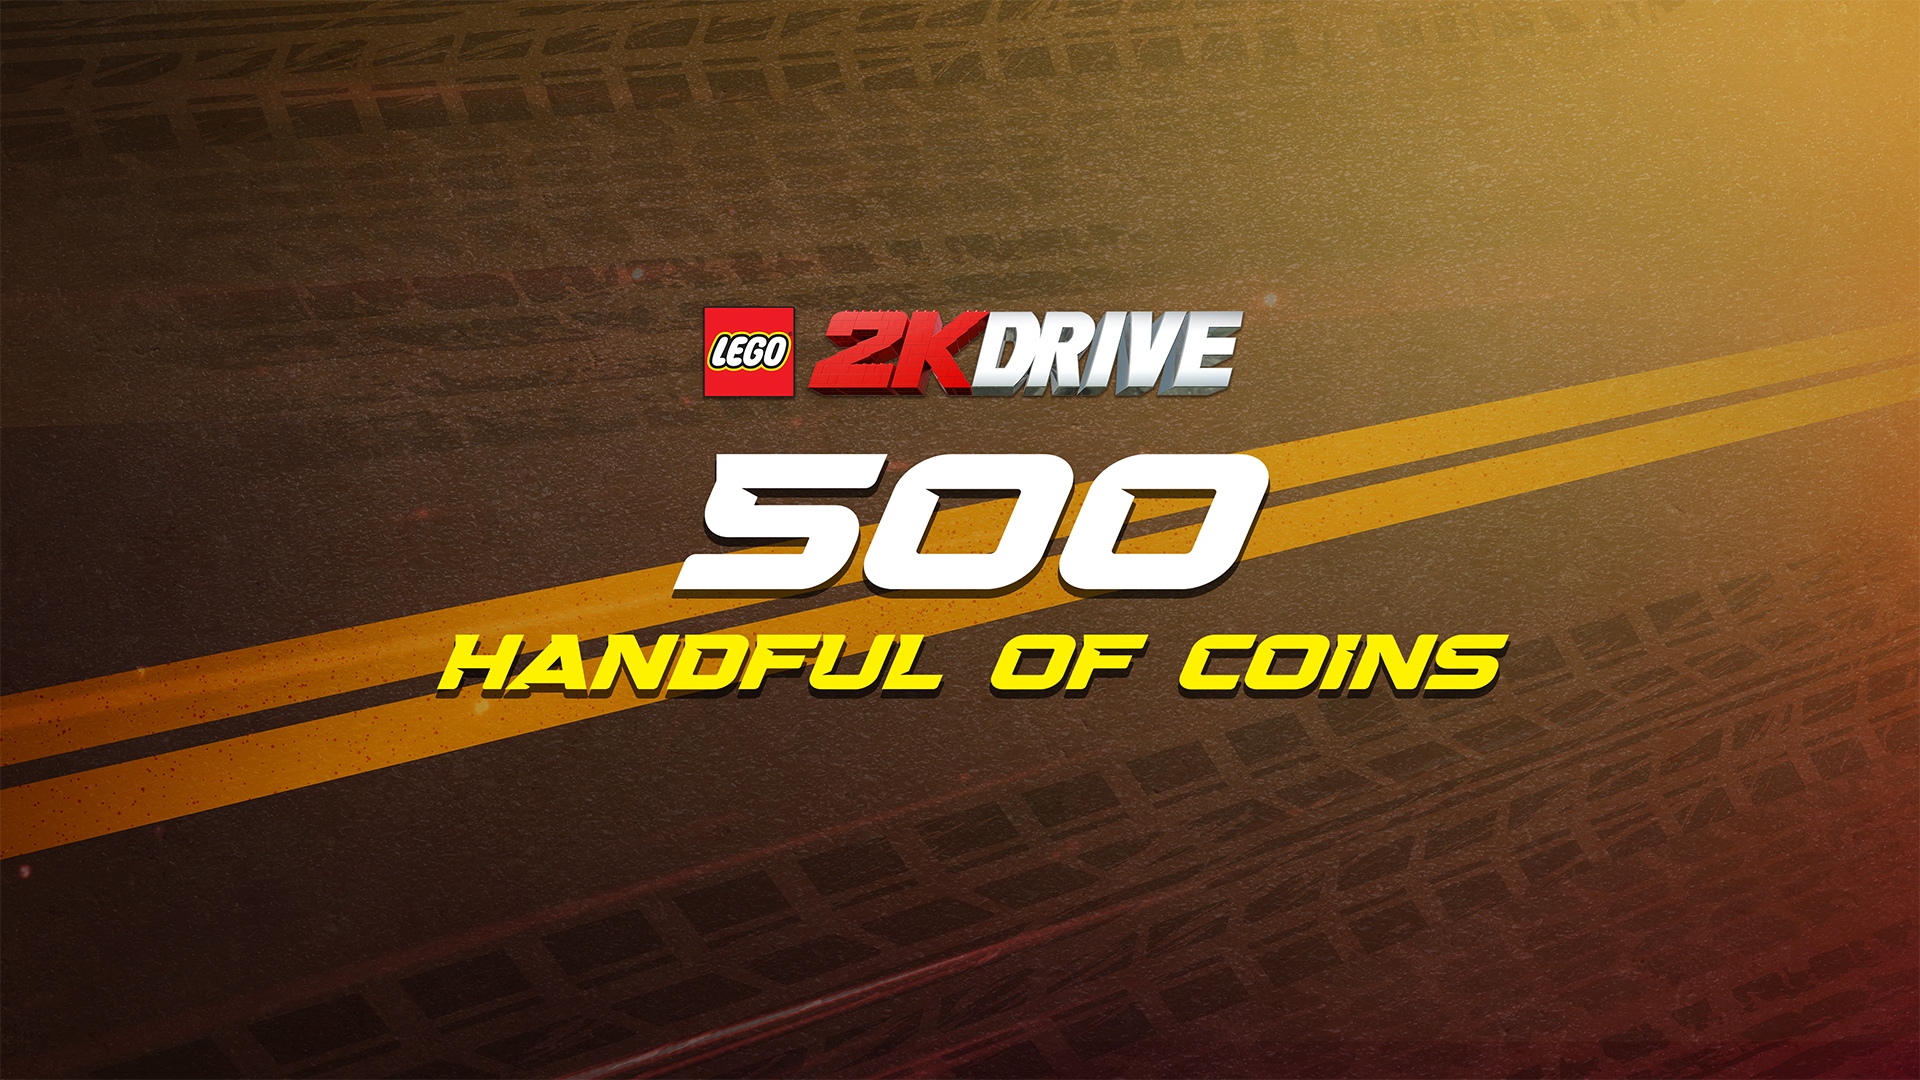 LEGO 2K Drive - Handful of Coins XBOX One / Xbox Series X|S CD Key 5.19 USD